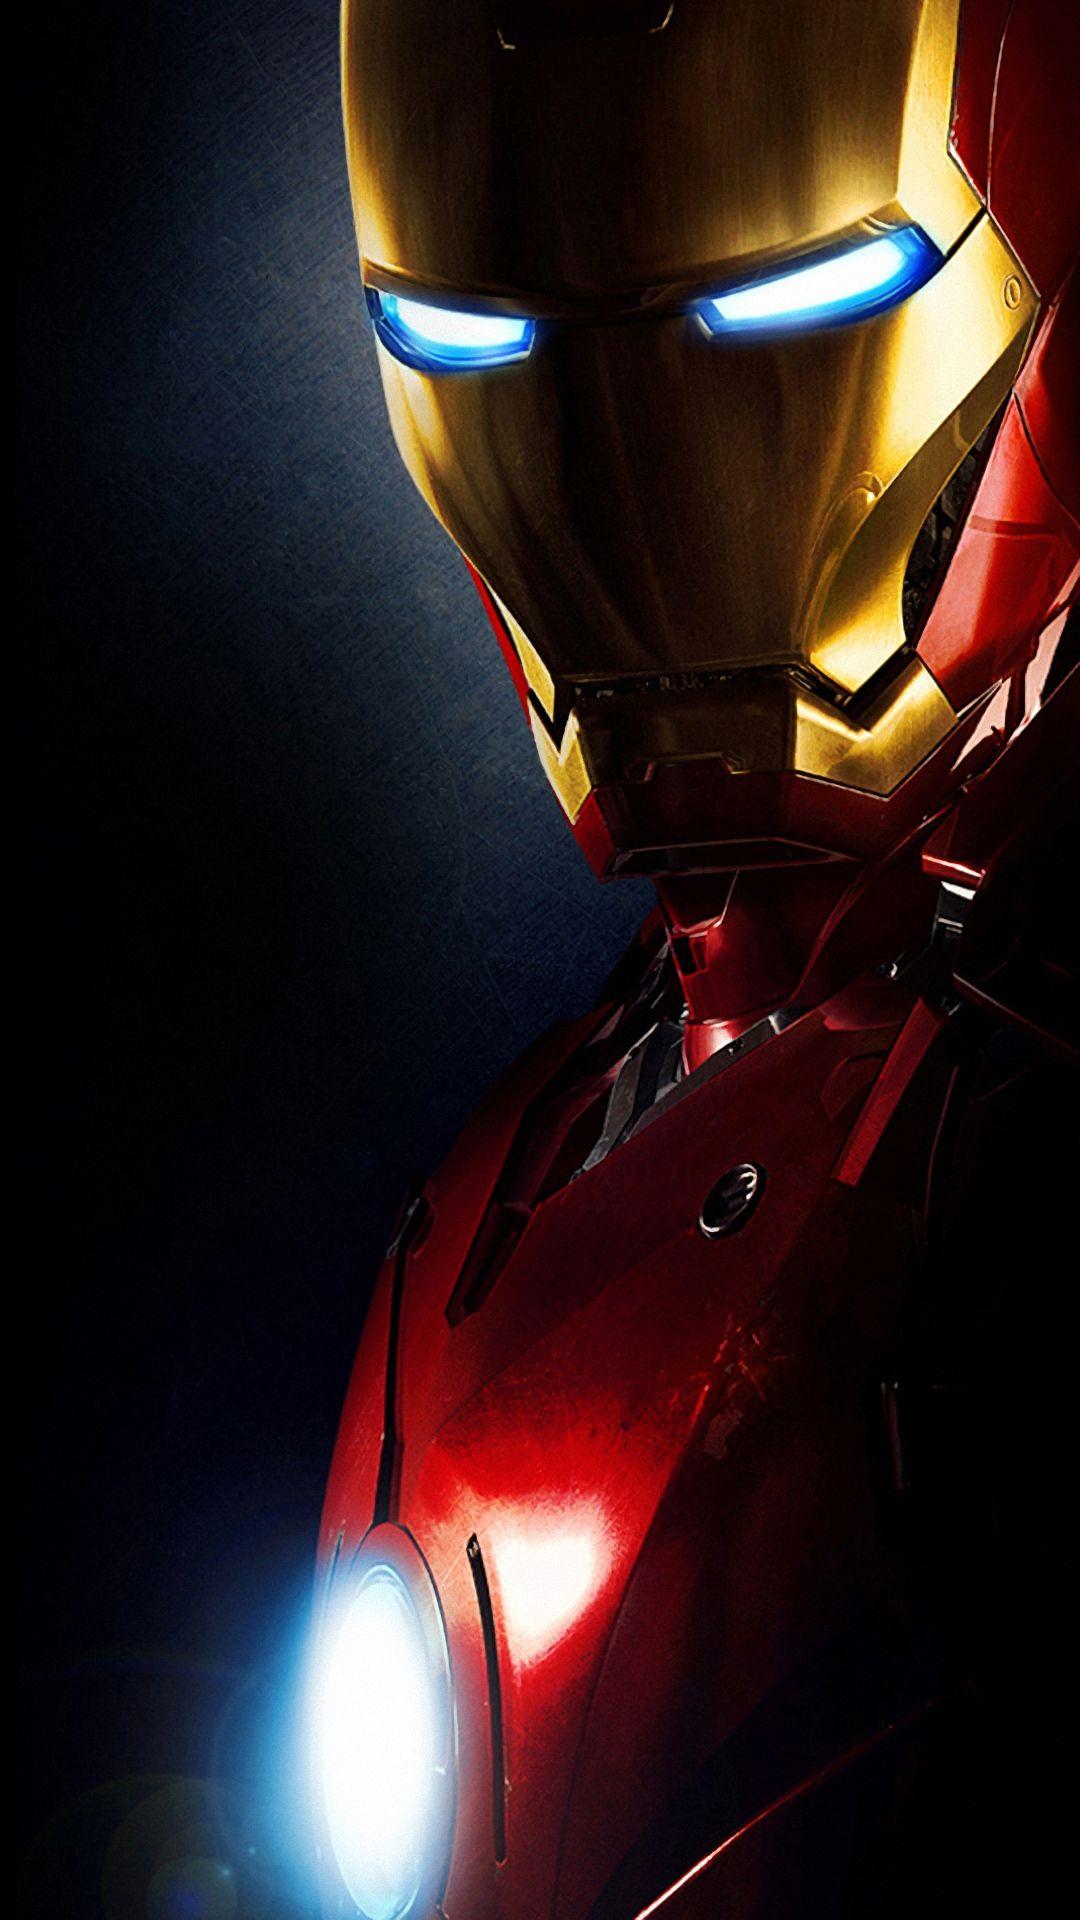 8200 Koleksi Gambar Iron Man Hd Gratis Terbaik